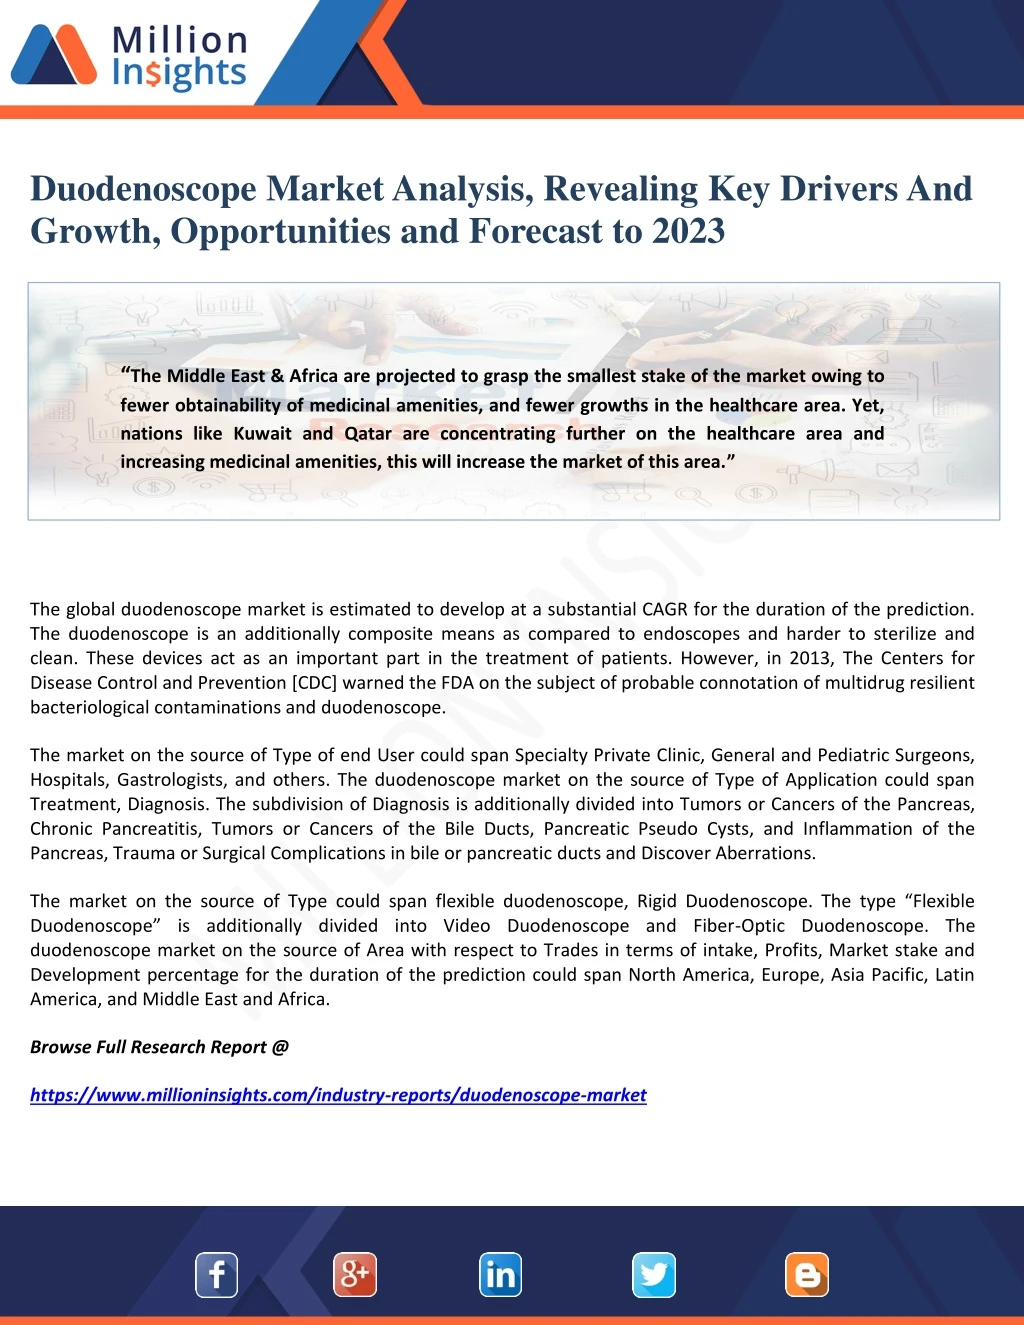 duodenoscope market analysis revealing